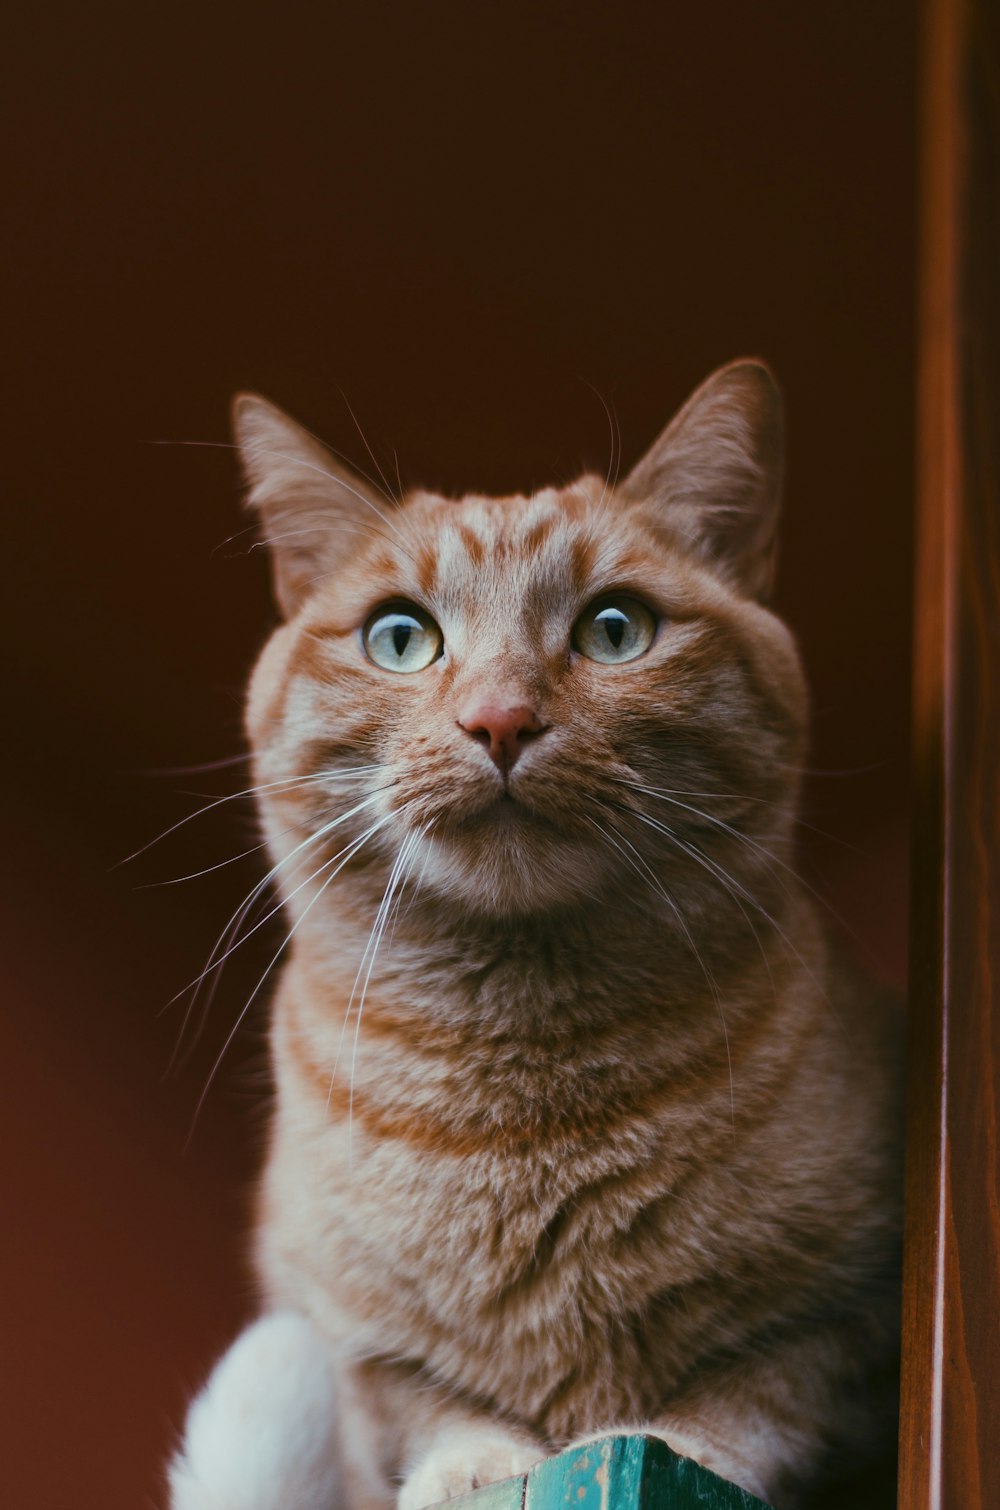 gato atigrado naranja en fotografía de primer plano